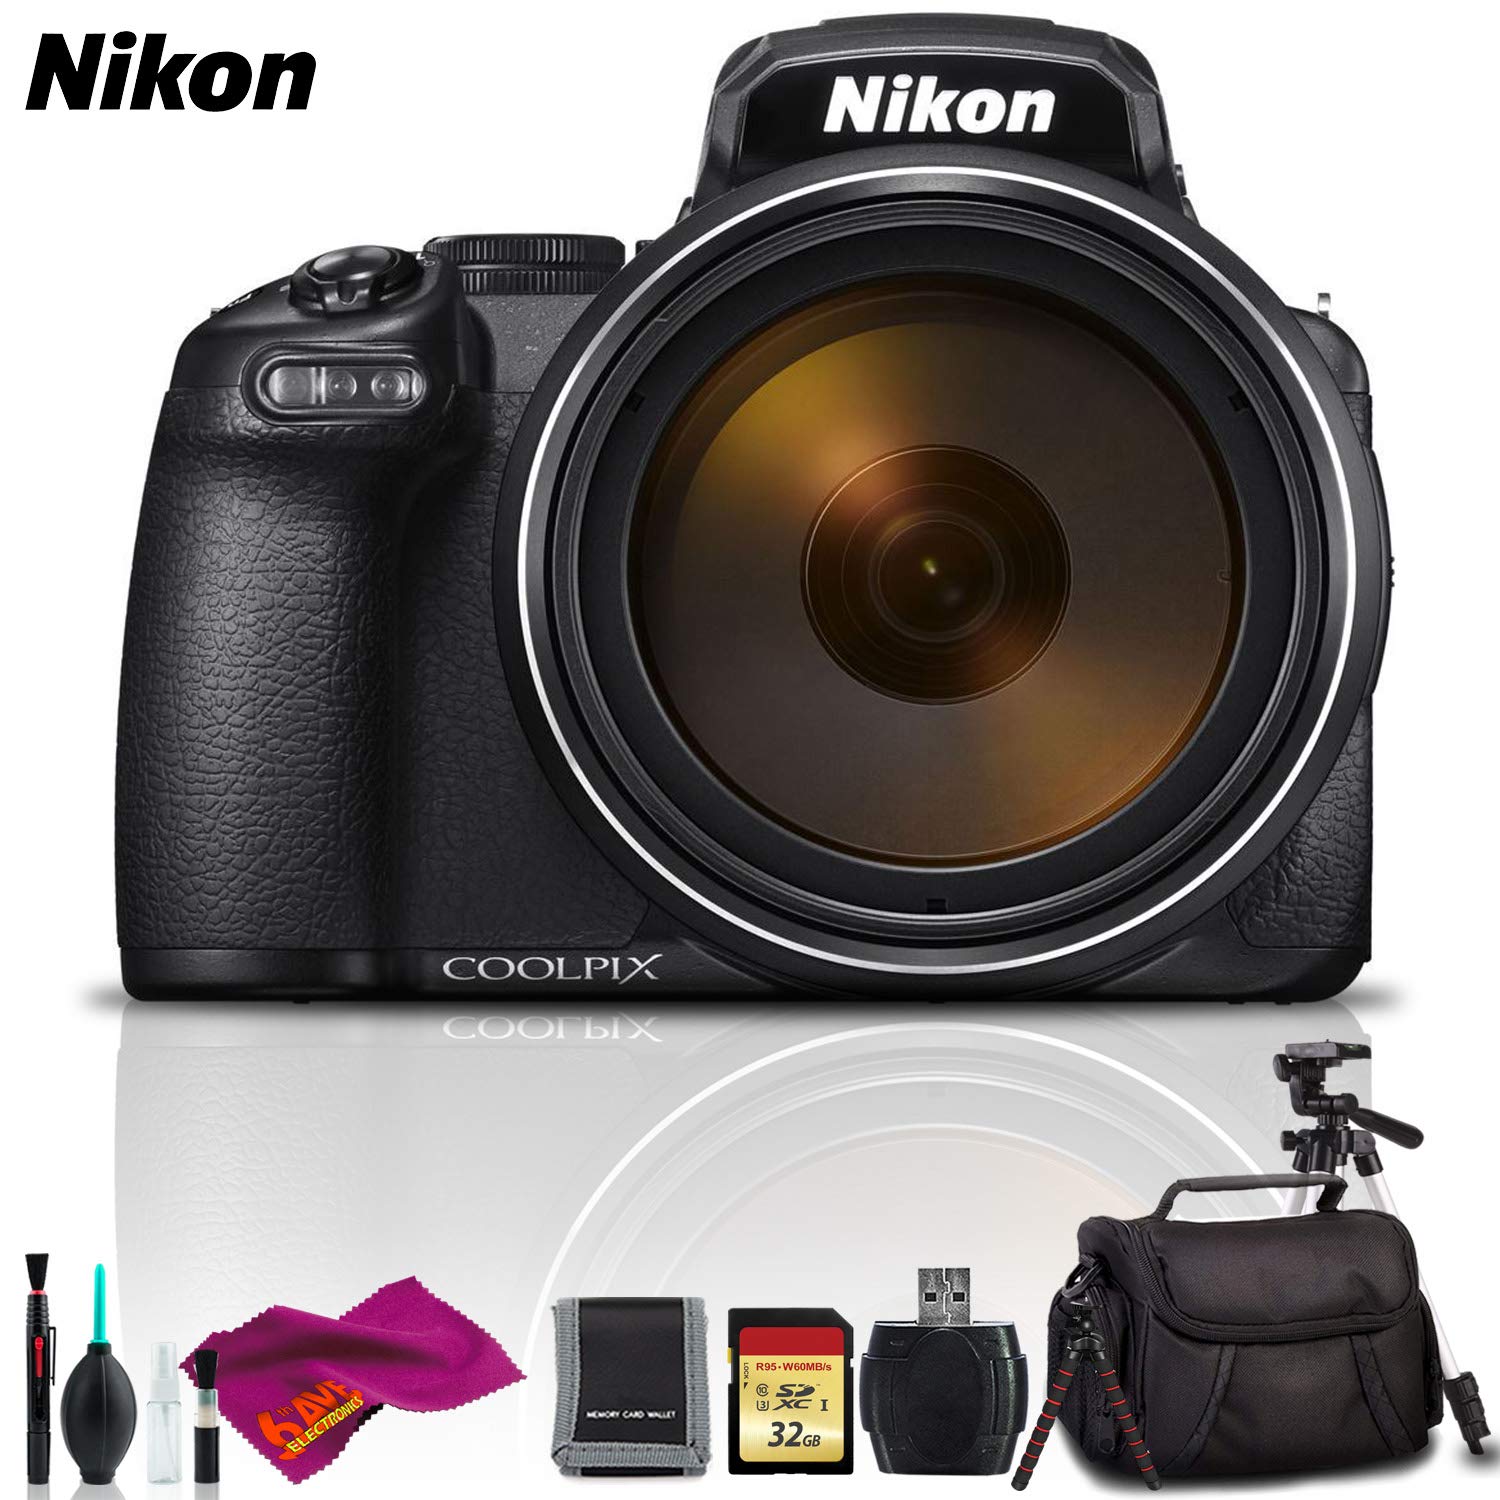 Nikon COOLPIX P1000 Digital Camera (Intl Model) - Deluxe Kit